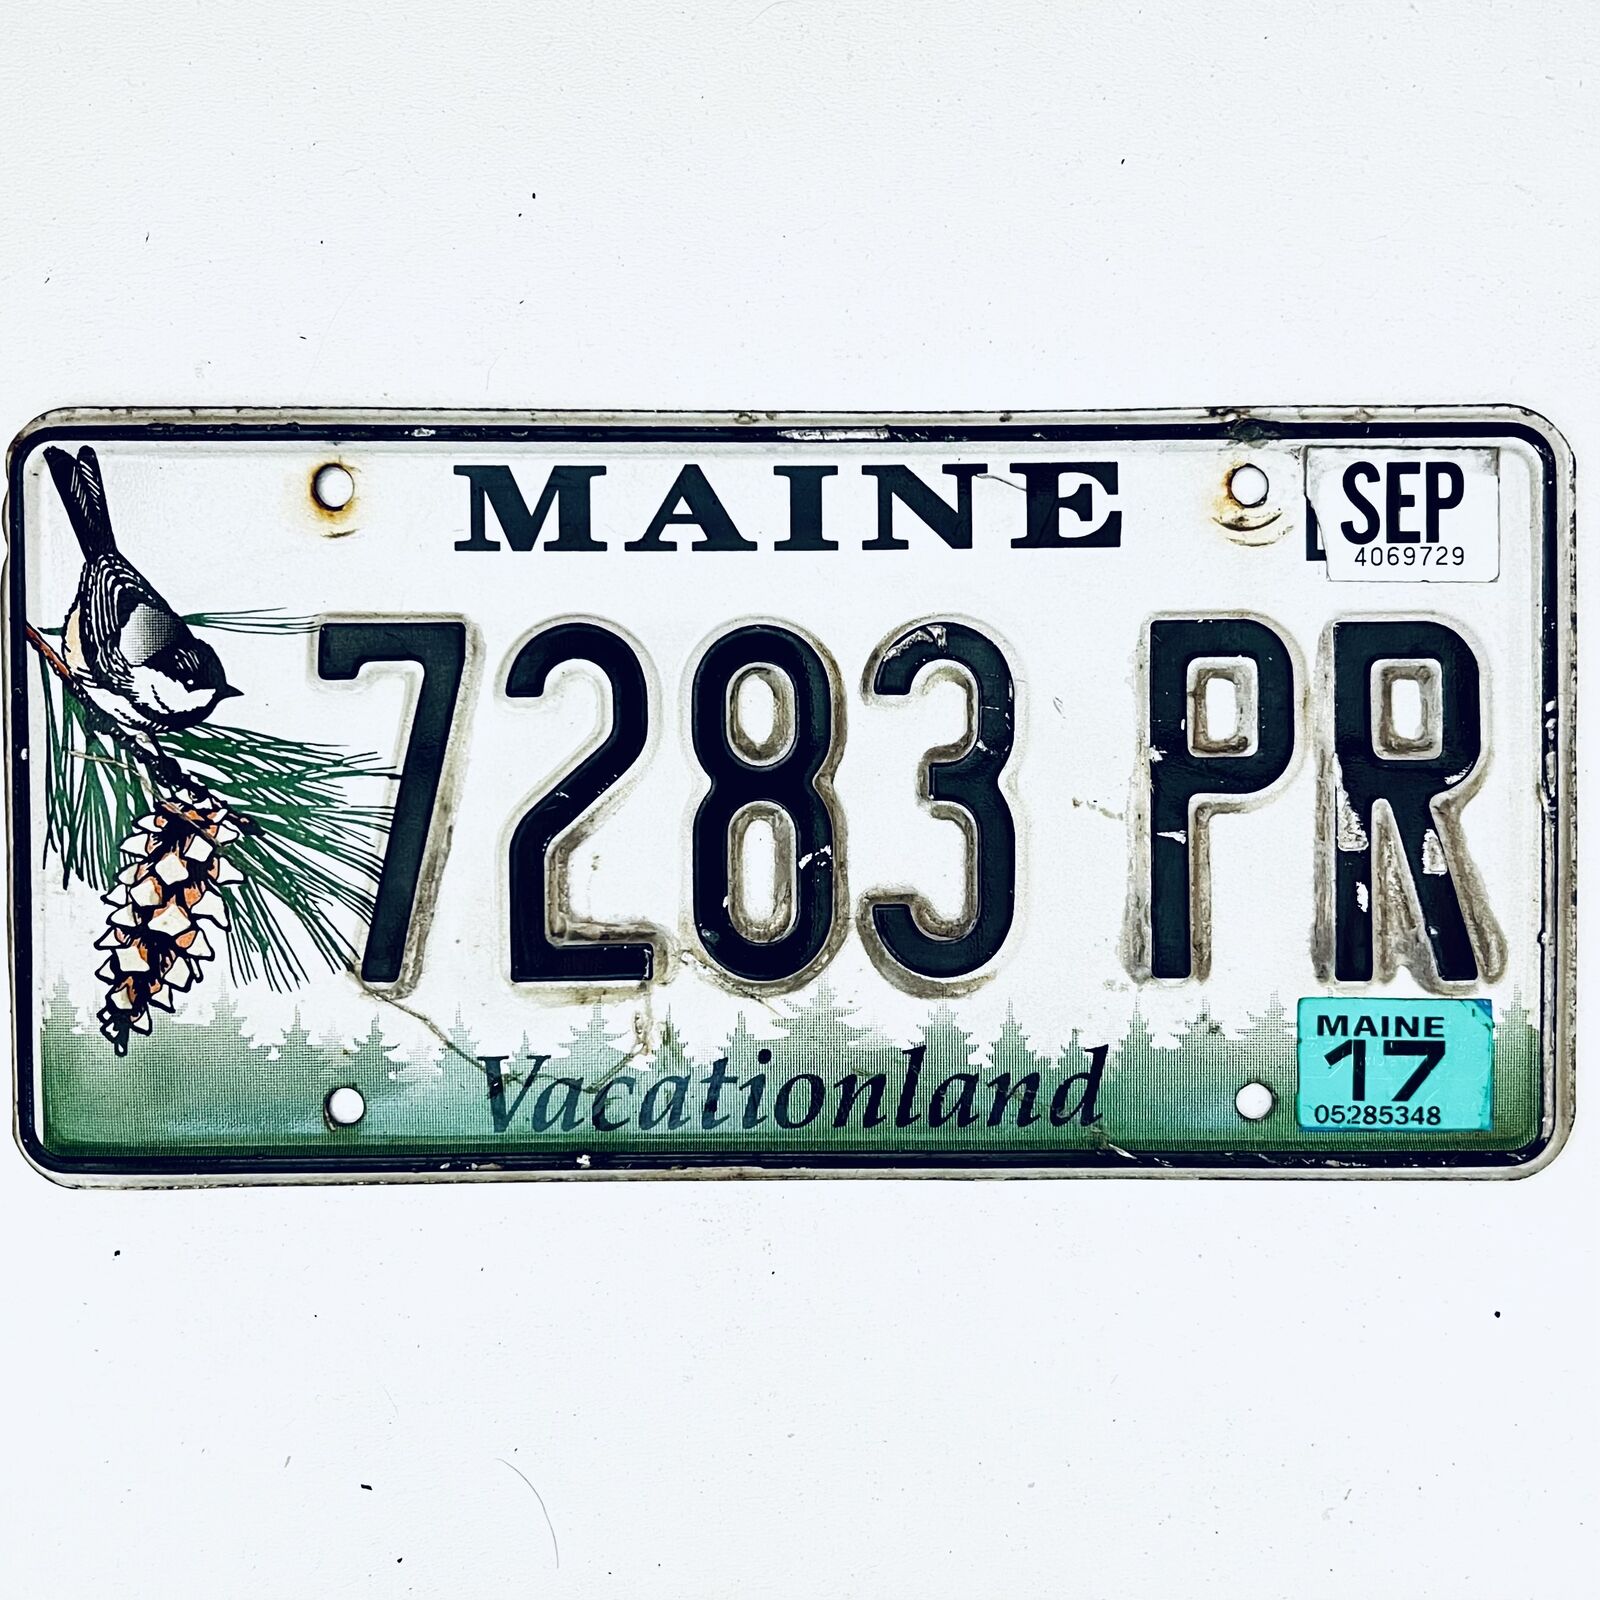 2017 United States Maine Vacationland Passsenger License Plate 7283 PR